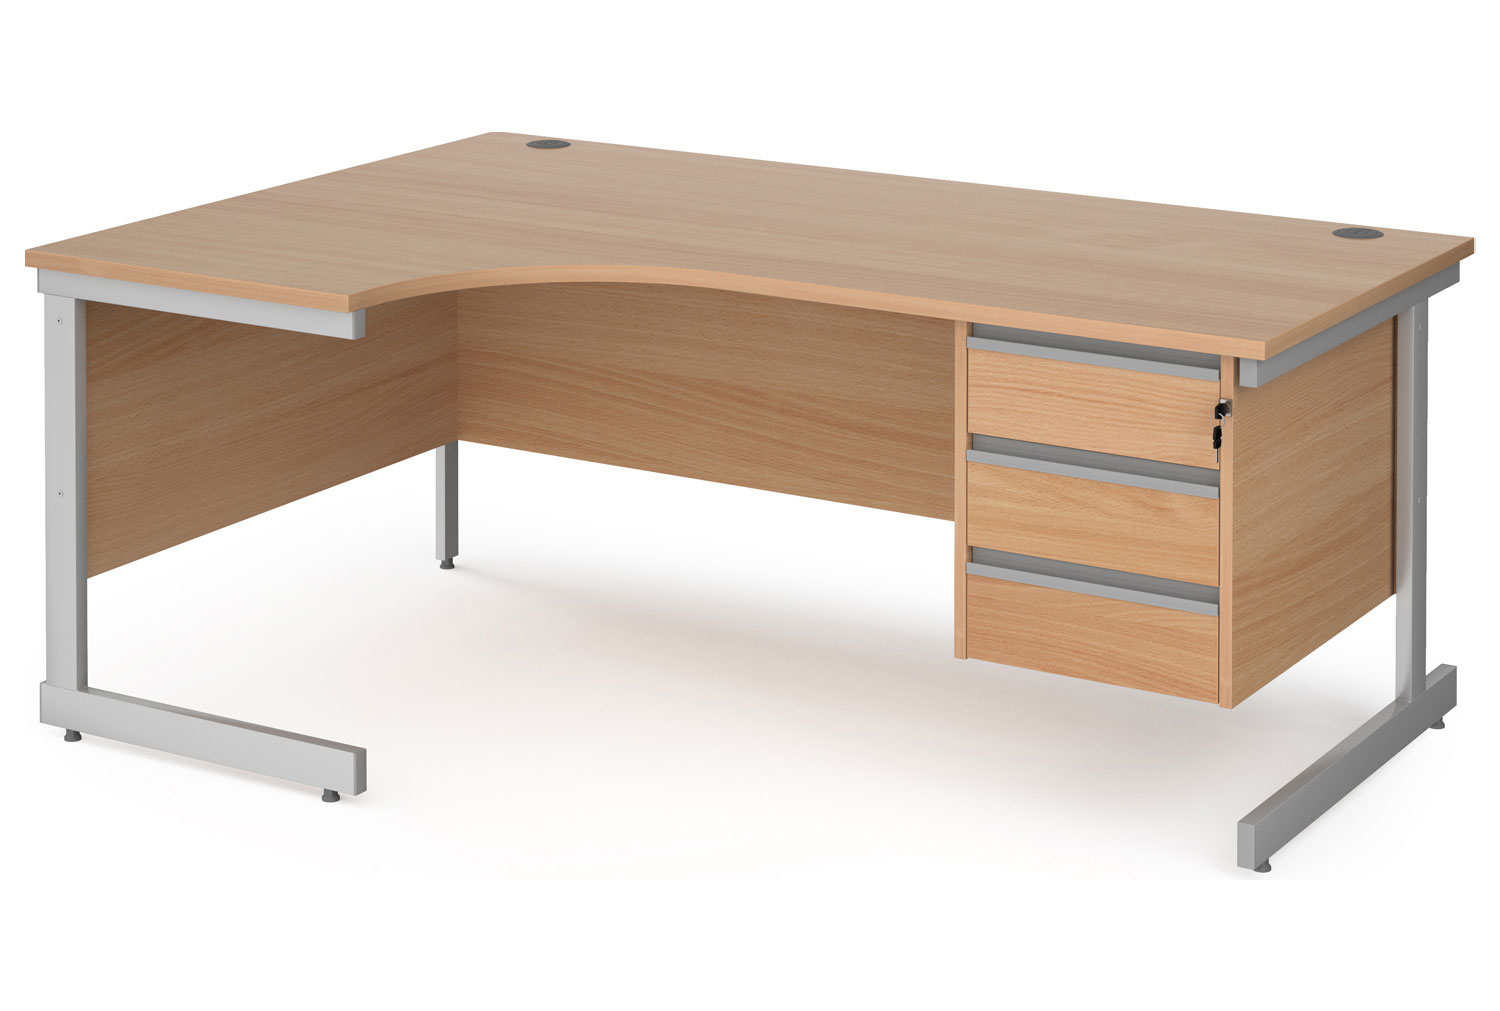 Value Line Classic+ C-Leg Left Ergo Office Desk 3 Drawers (Silver Leg), 160wx120/80dx73h (cm), Beech